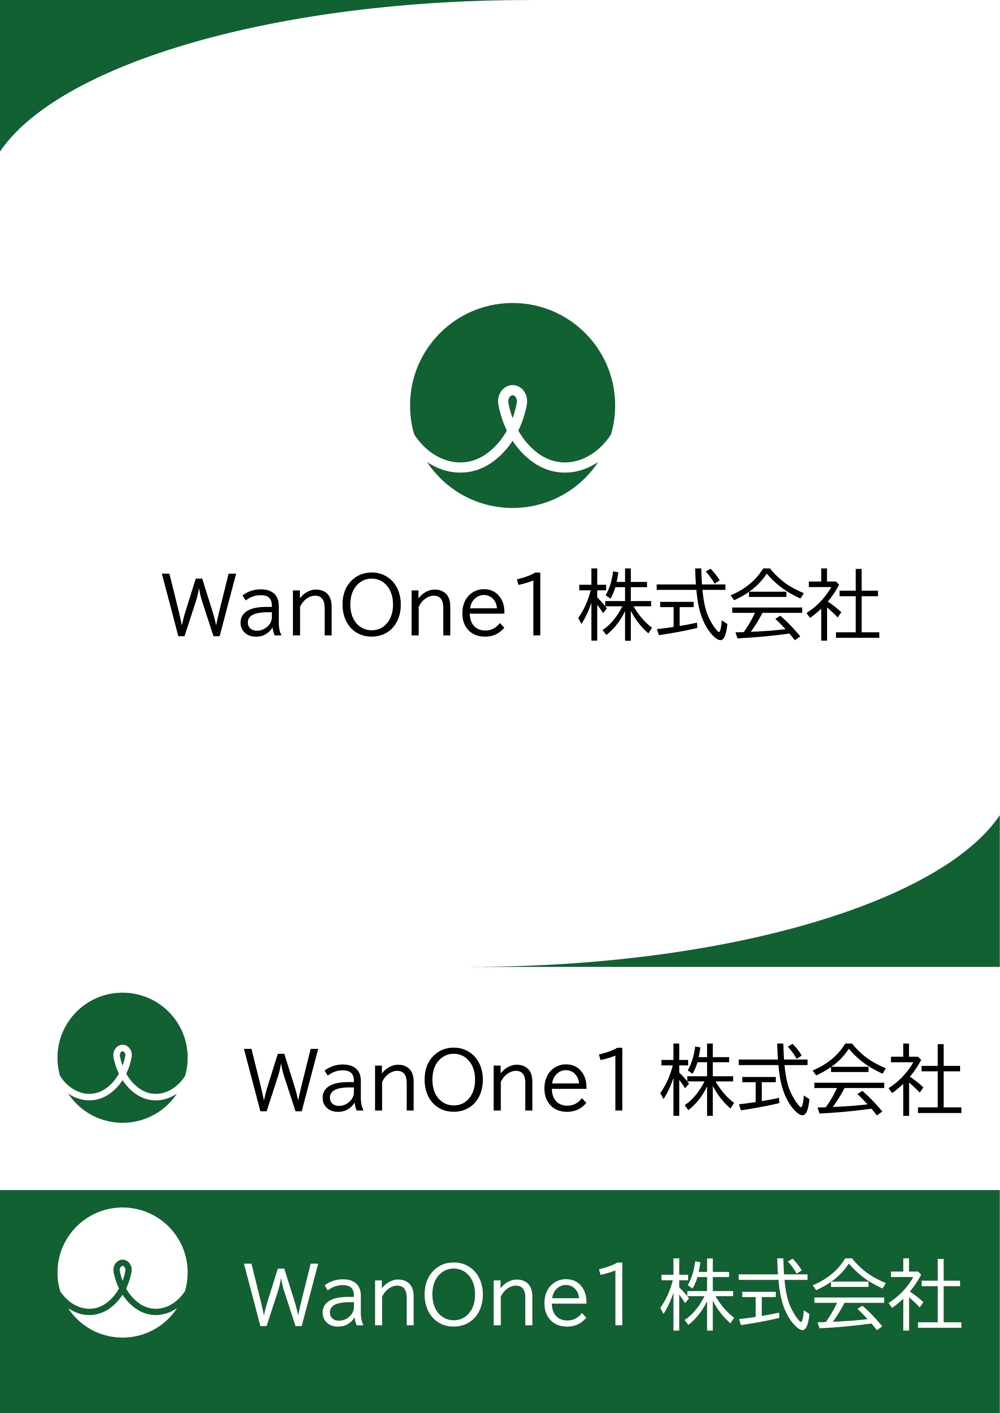 WanOne1株式会社_アートボード 1.jpg